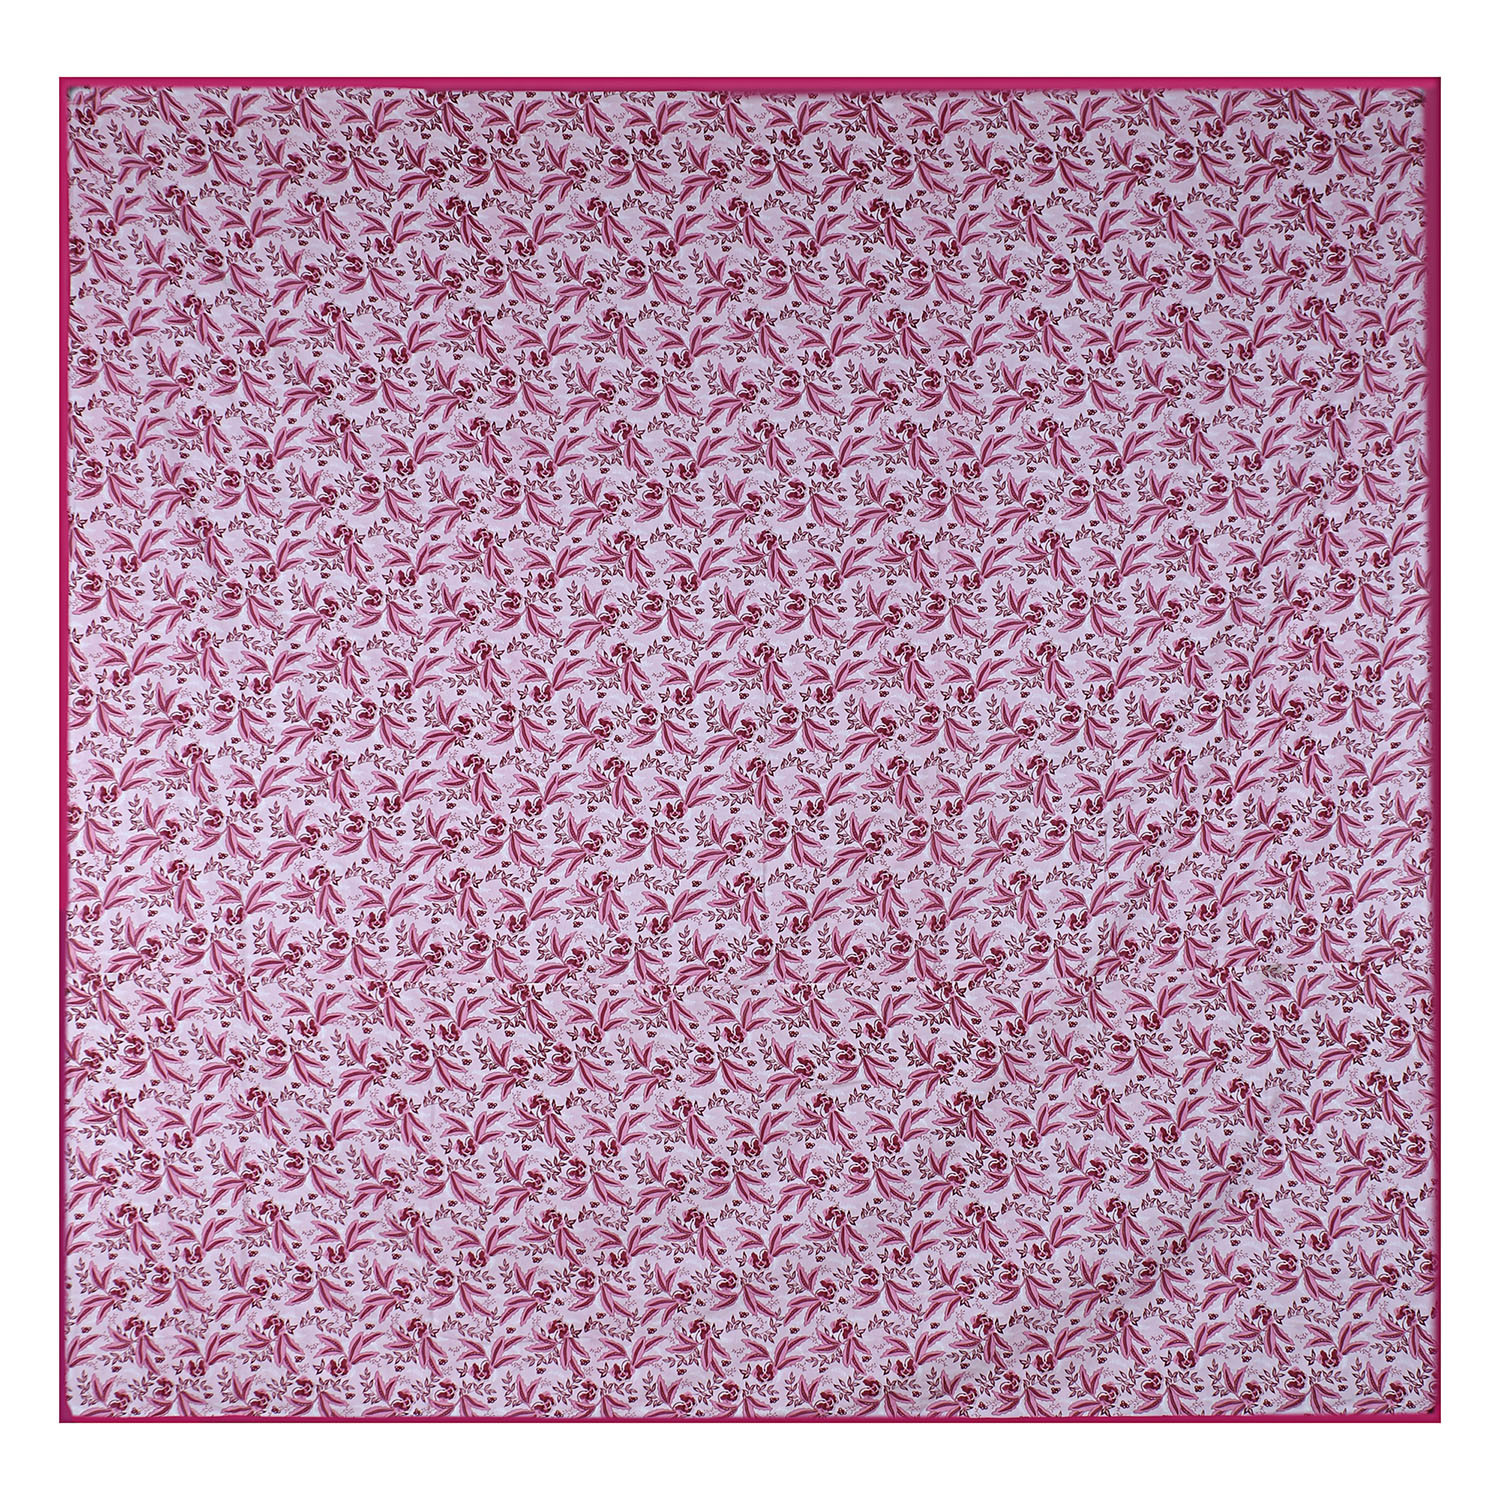 Kuber Industries Cotton Soft Lightweight Tropical Plant Design Reversible Single Bed Dohar | Blanket | AC Quilt for Home & Travel (Pink)